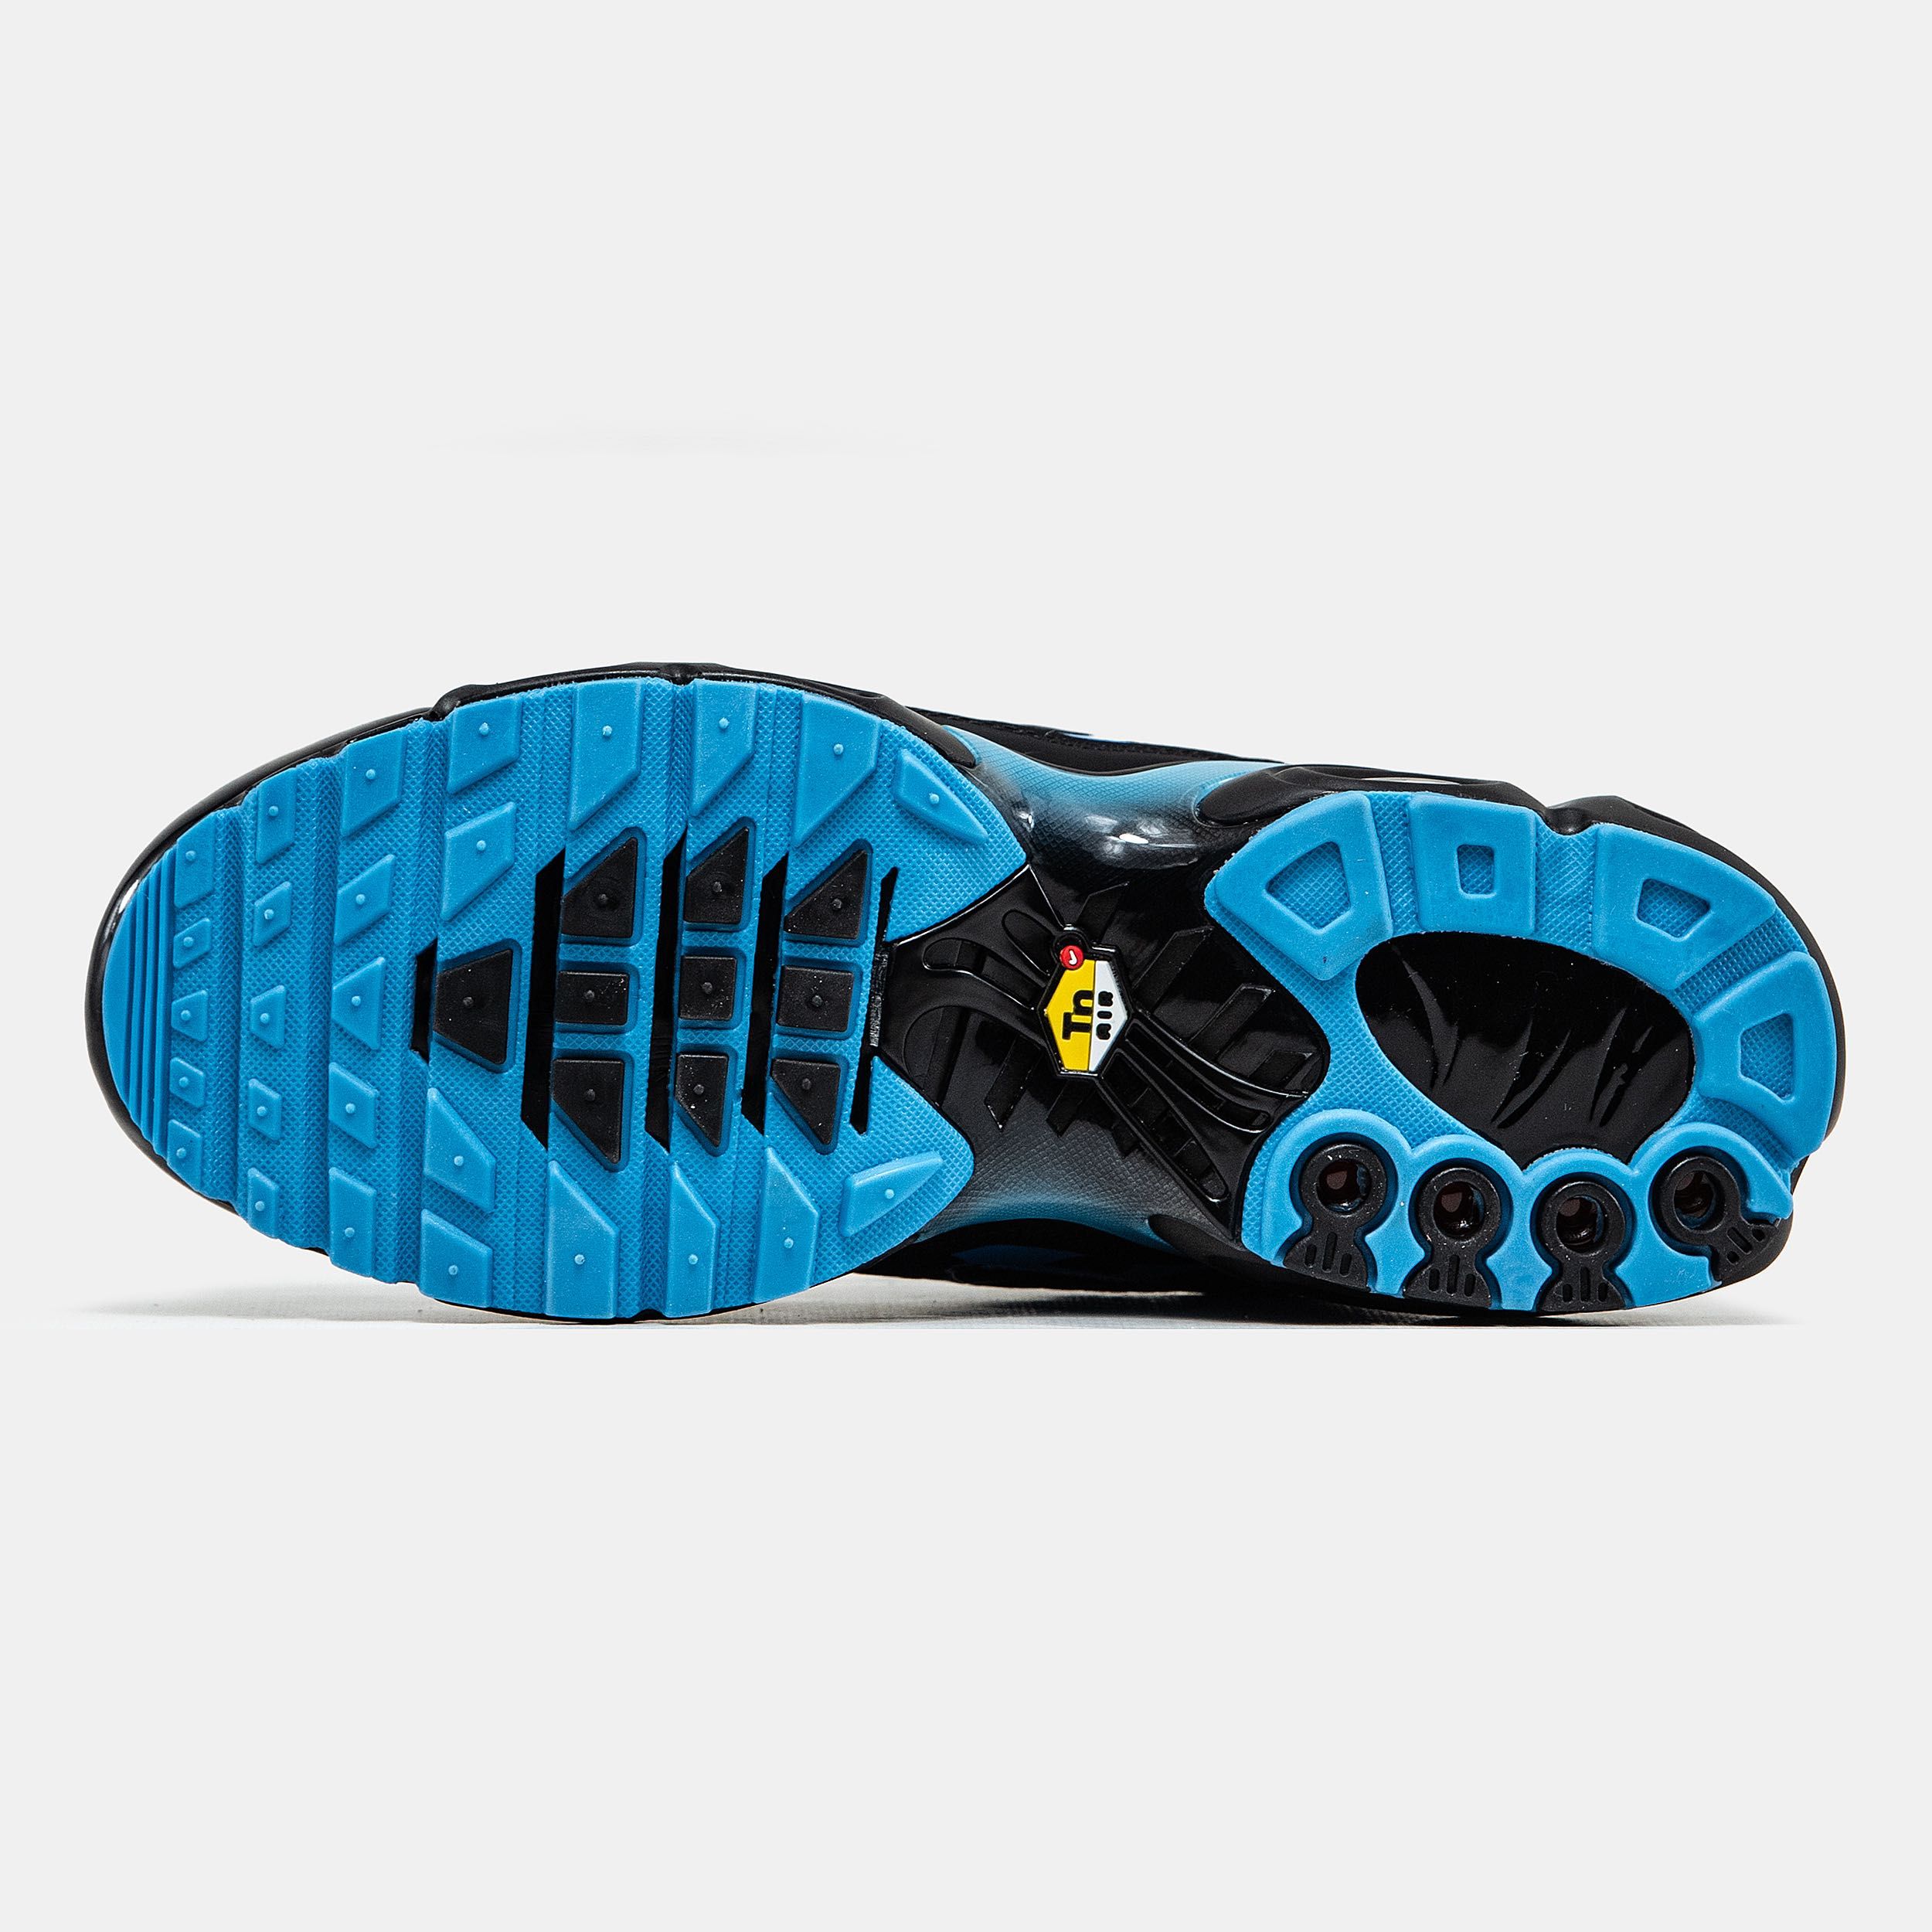 Мужские кроссовки Nike Air Max Tn Plus black&blue. Размеры 40-46